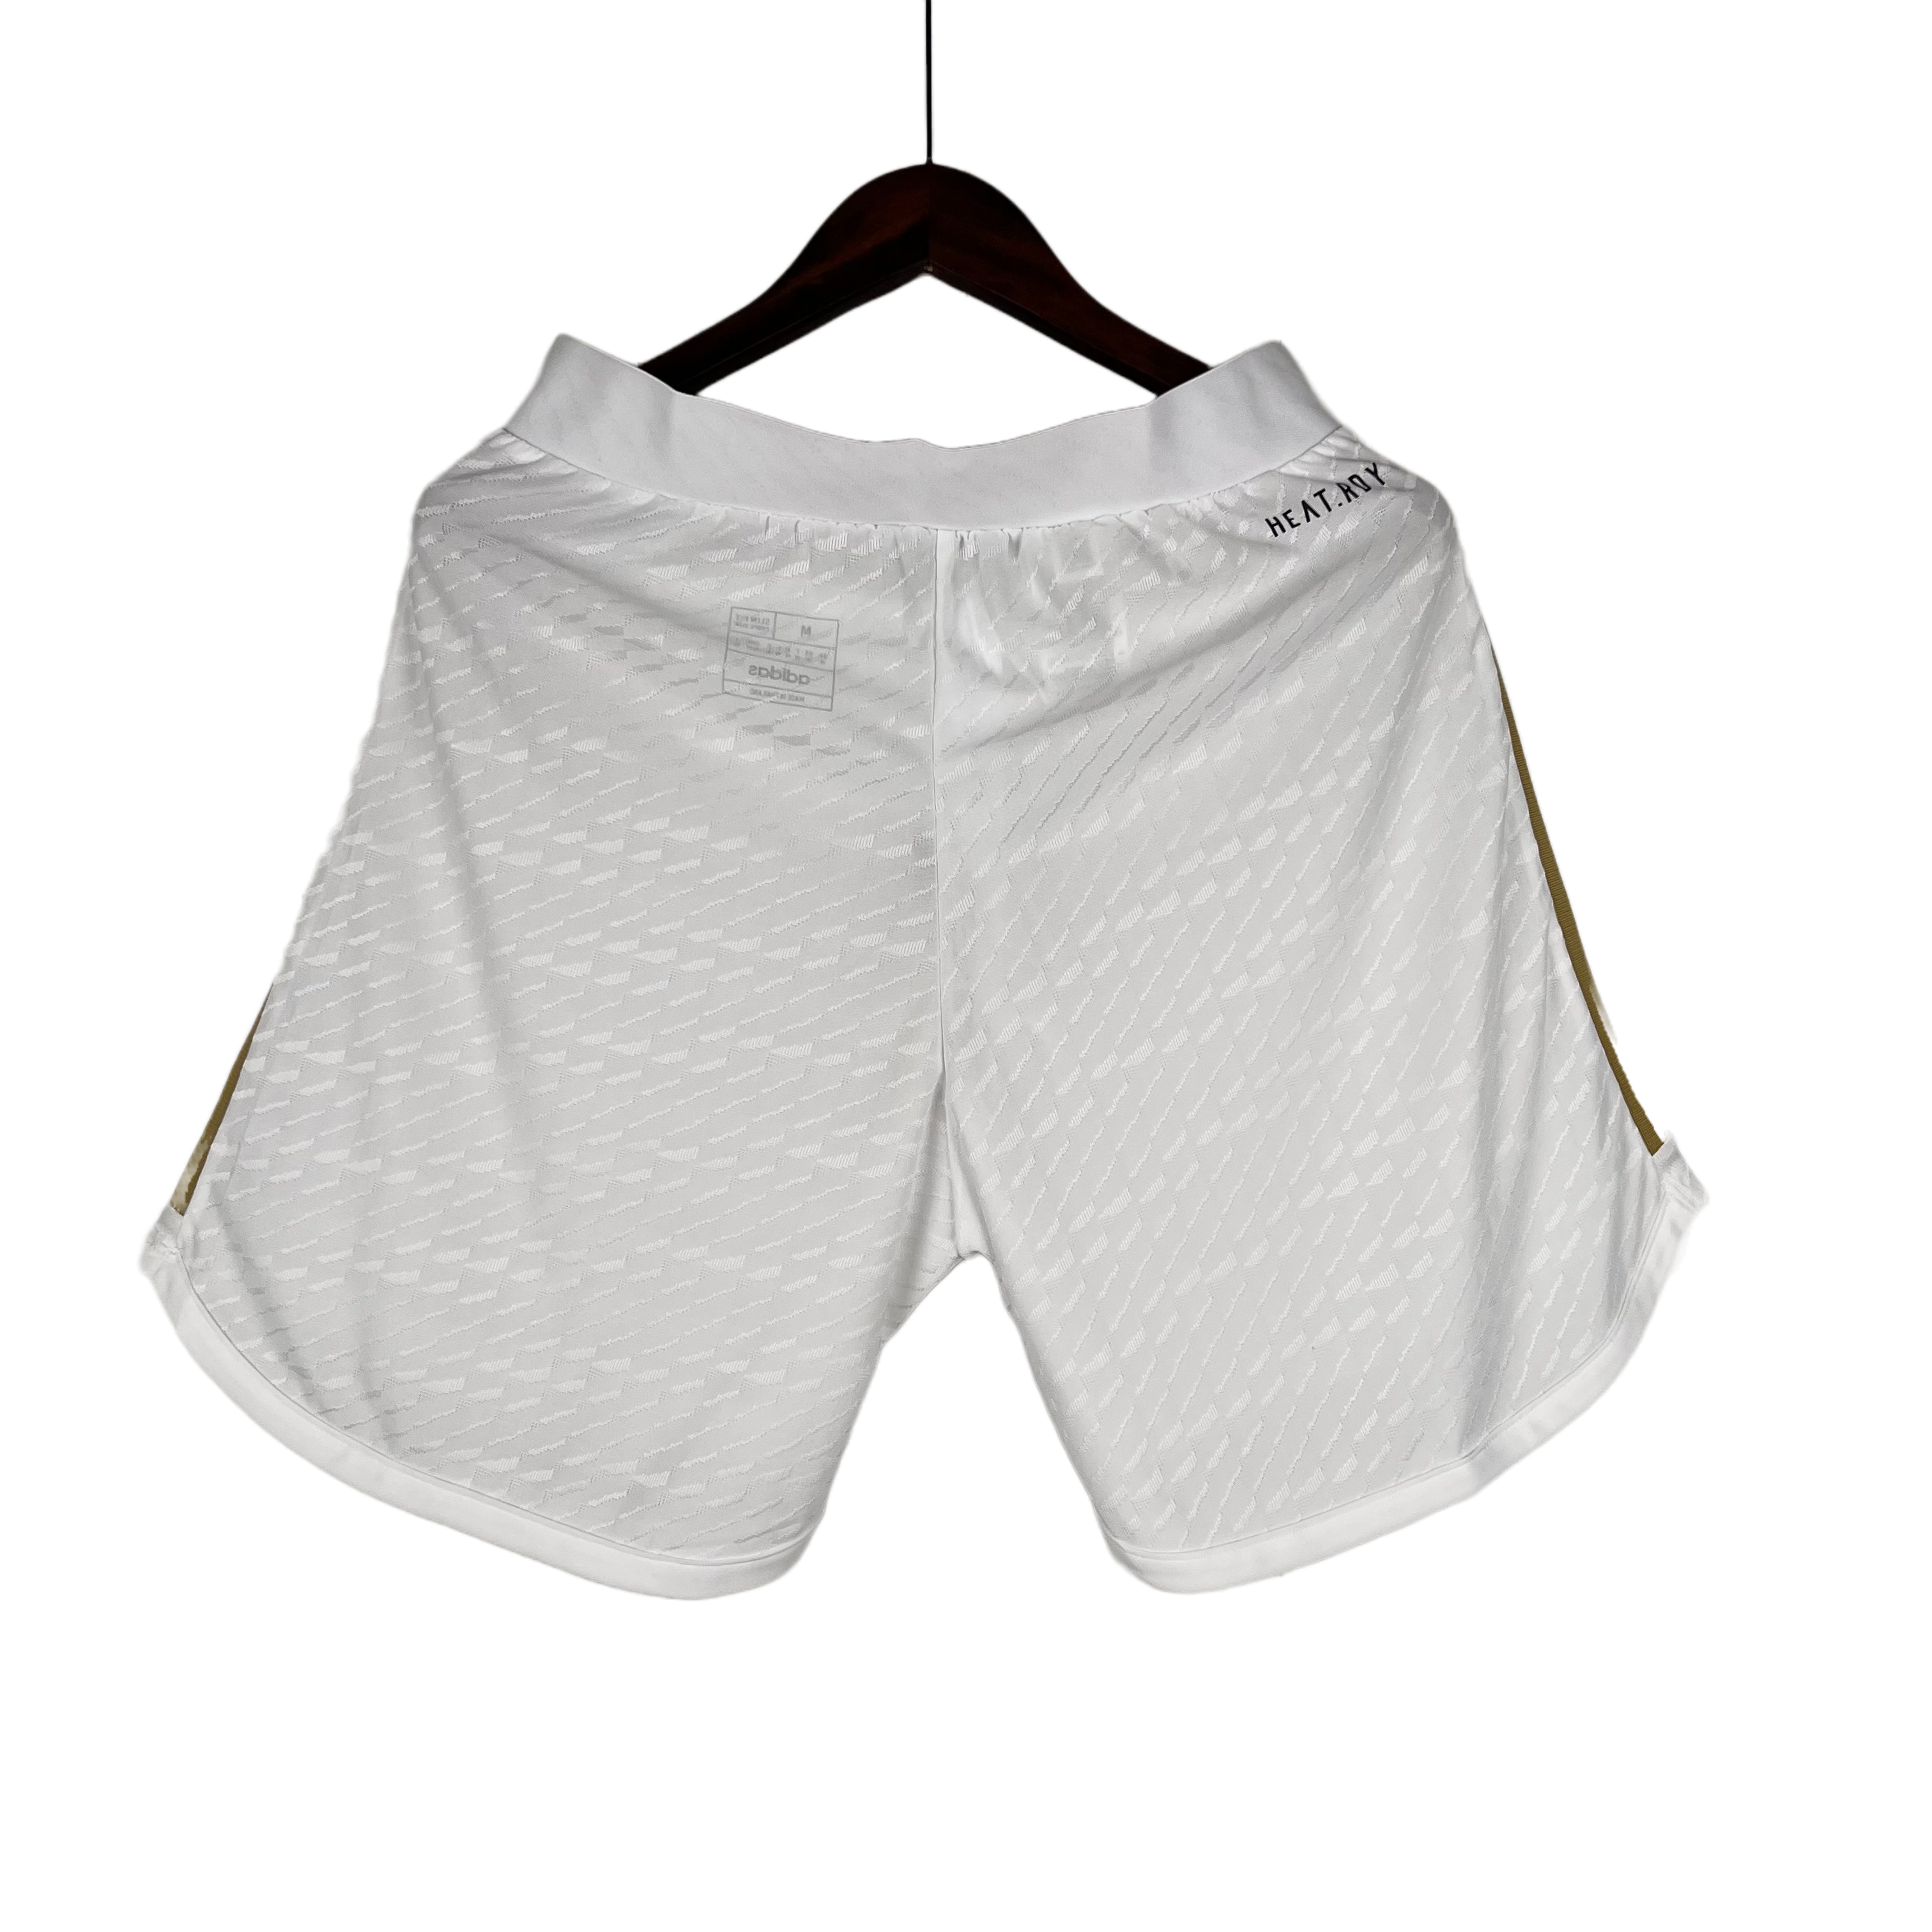 Lione - 23/24 Shorts